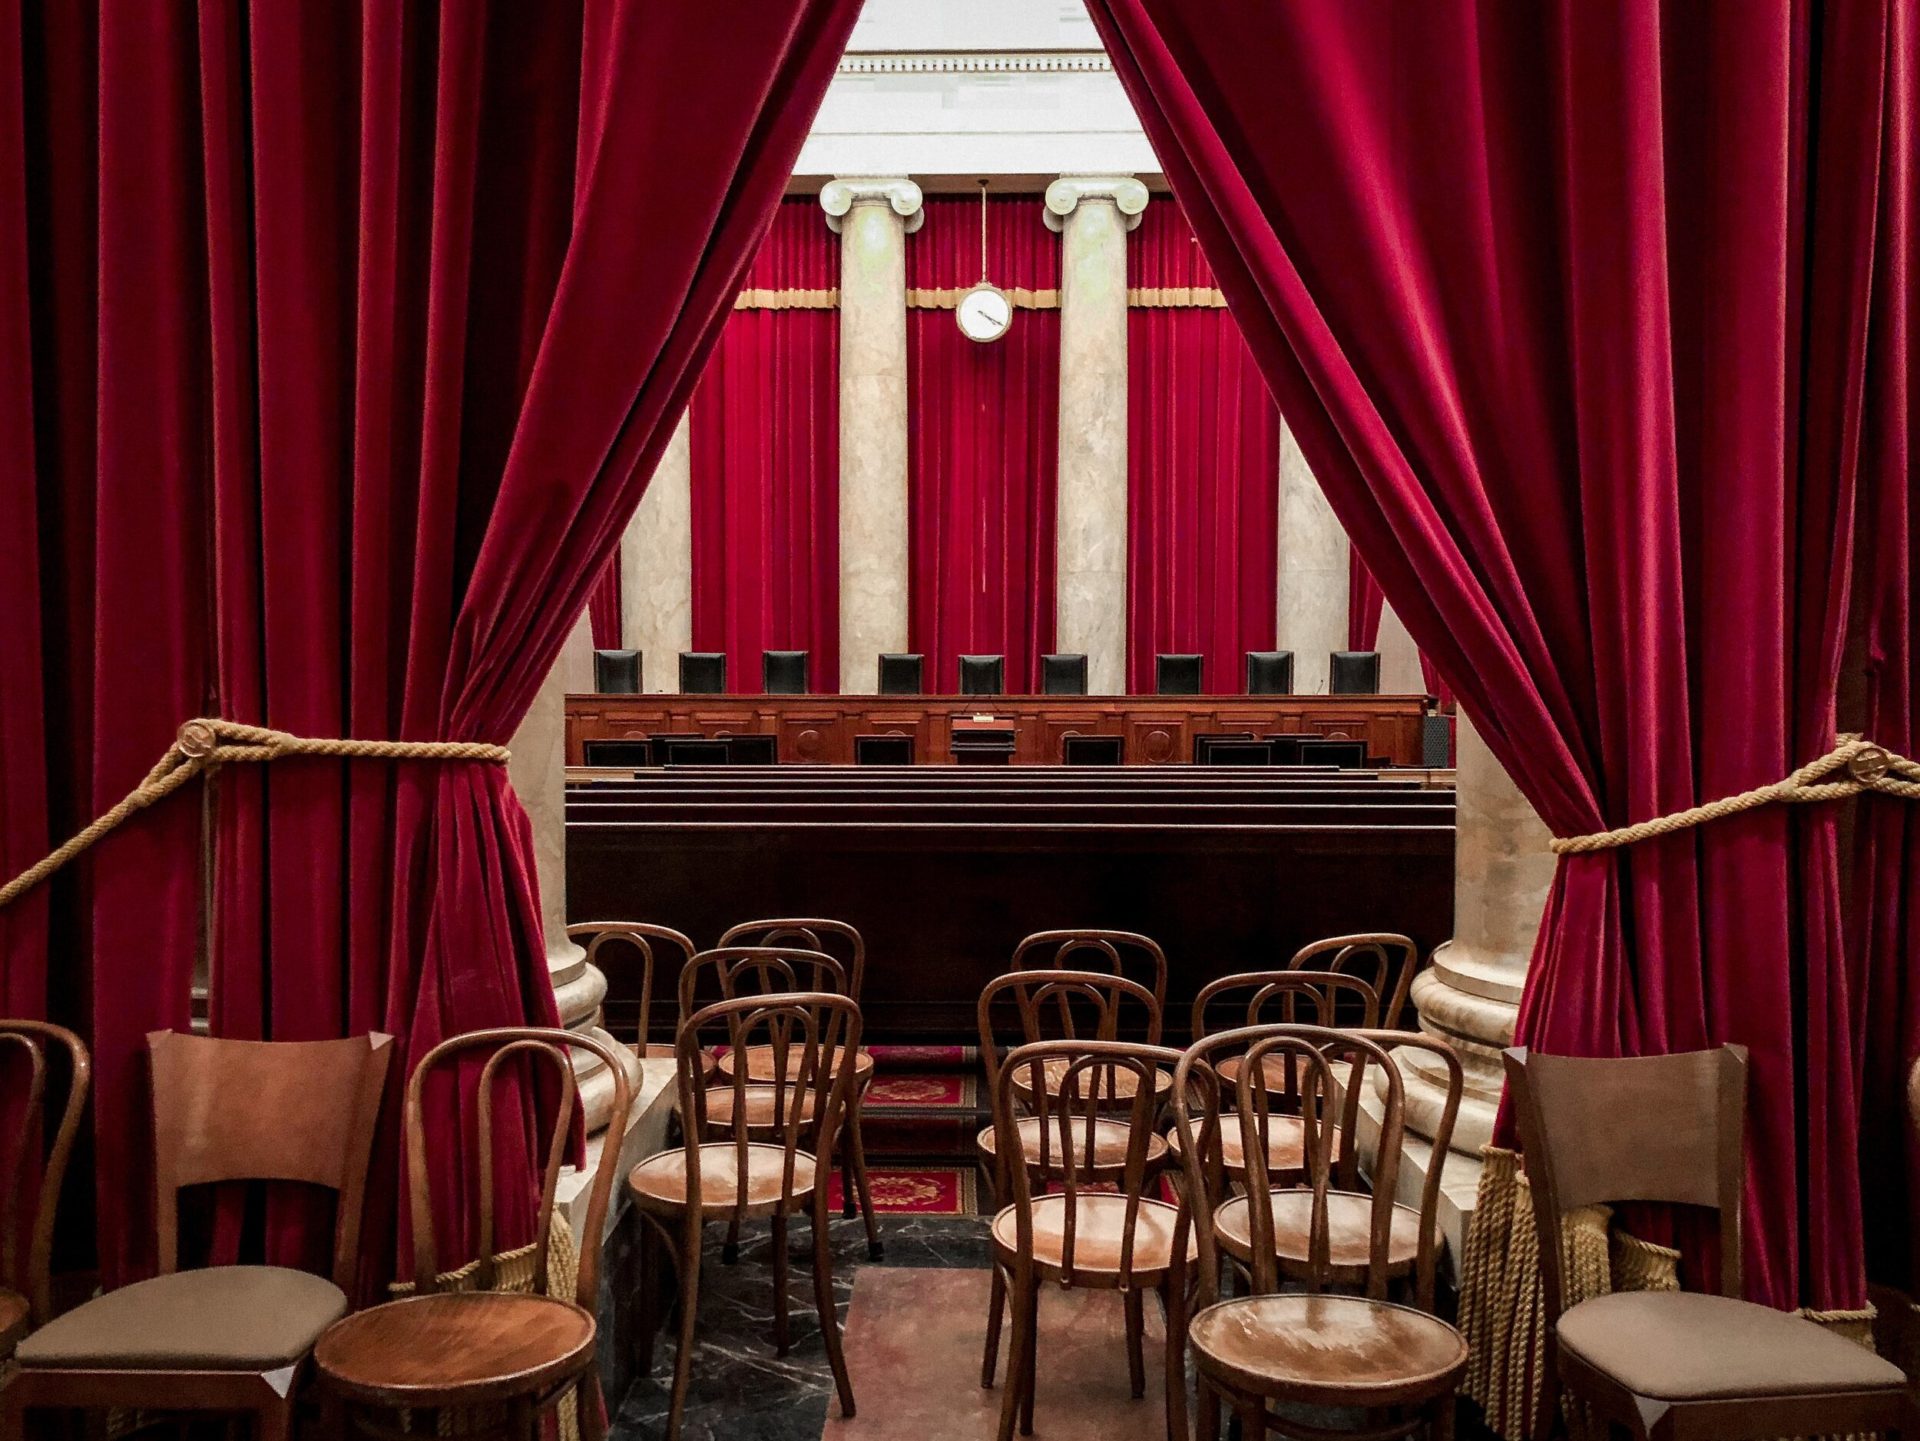 July 29, 2020 - Interior of the U.S. Supreme Court (Photo by Jackie Hope | Unsplash)